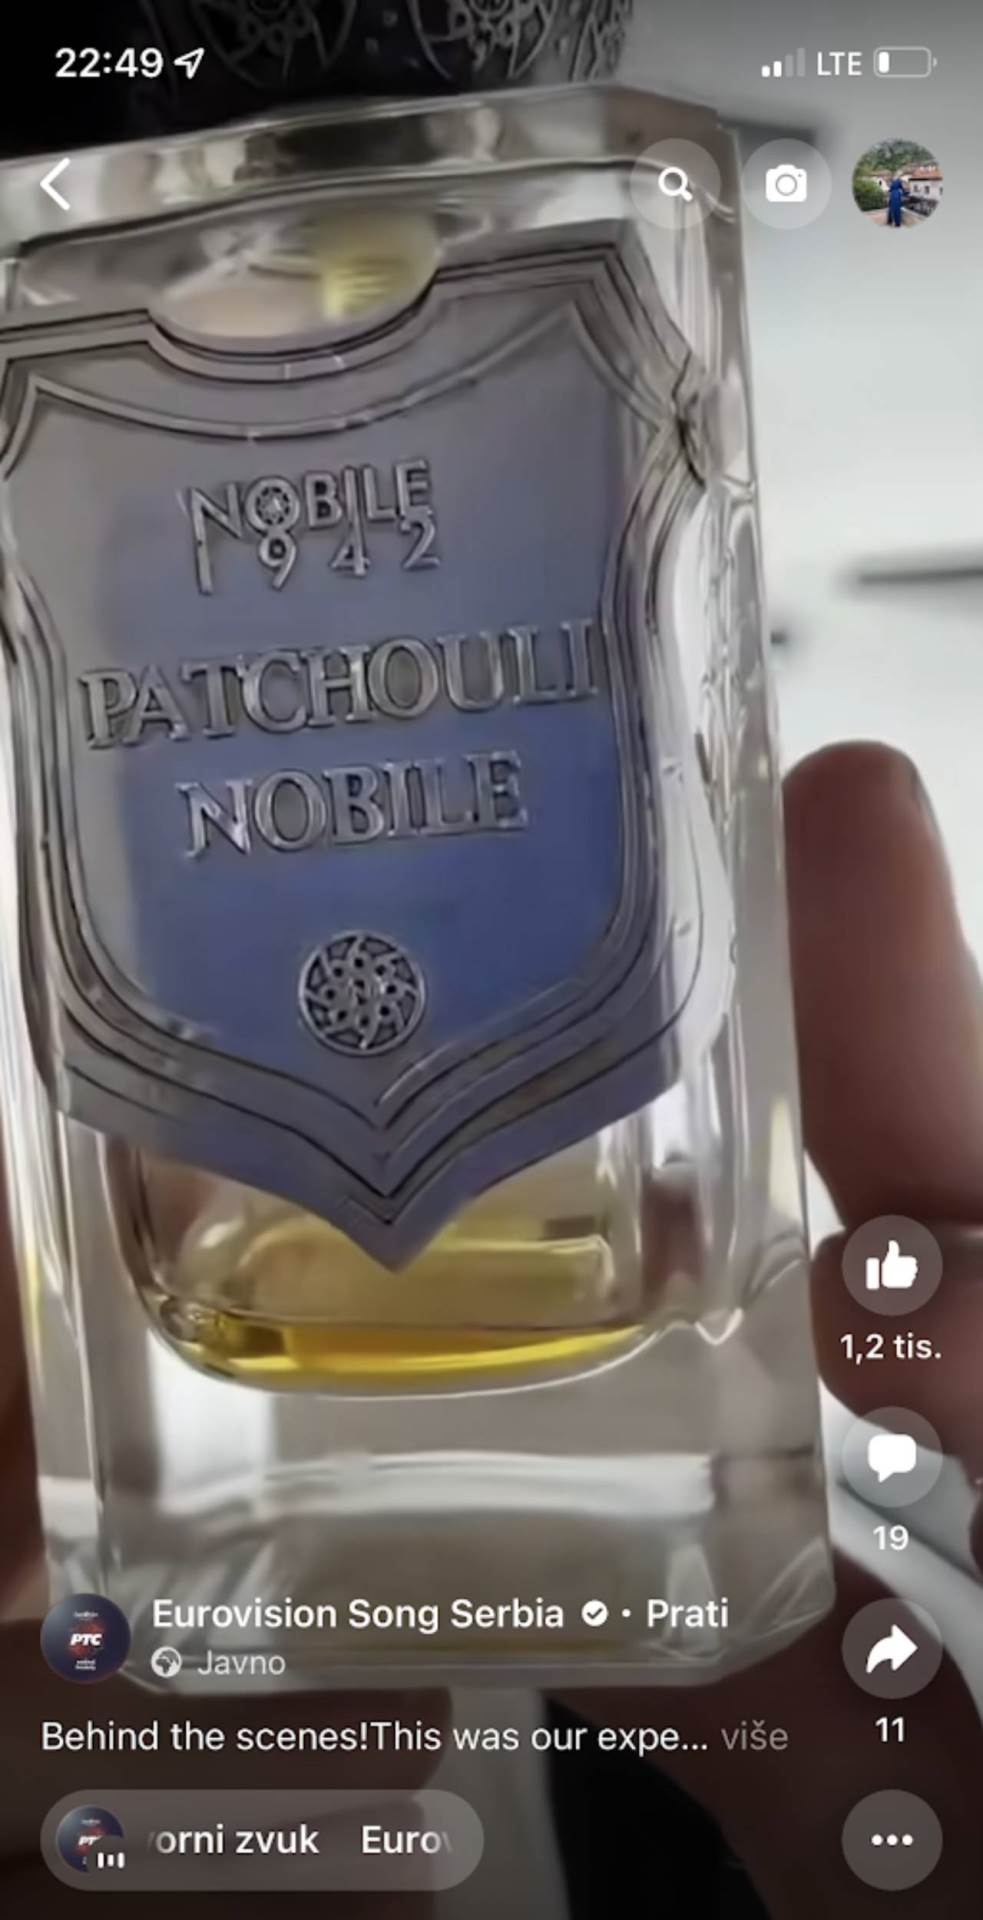  Patchouli Nobile spada u senzualne, jake mirise. 